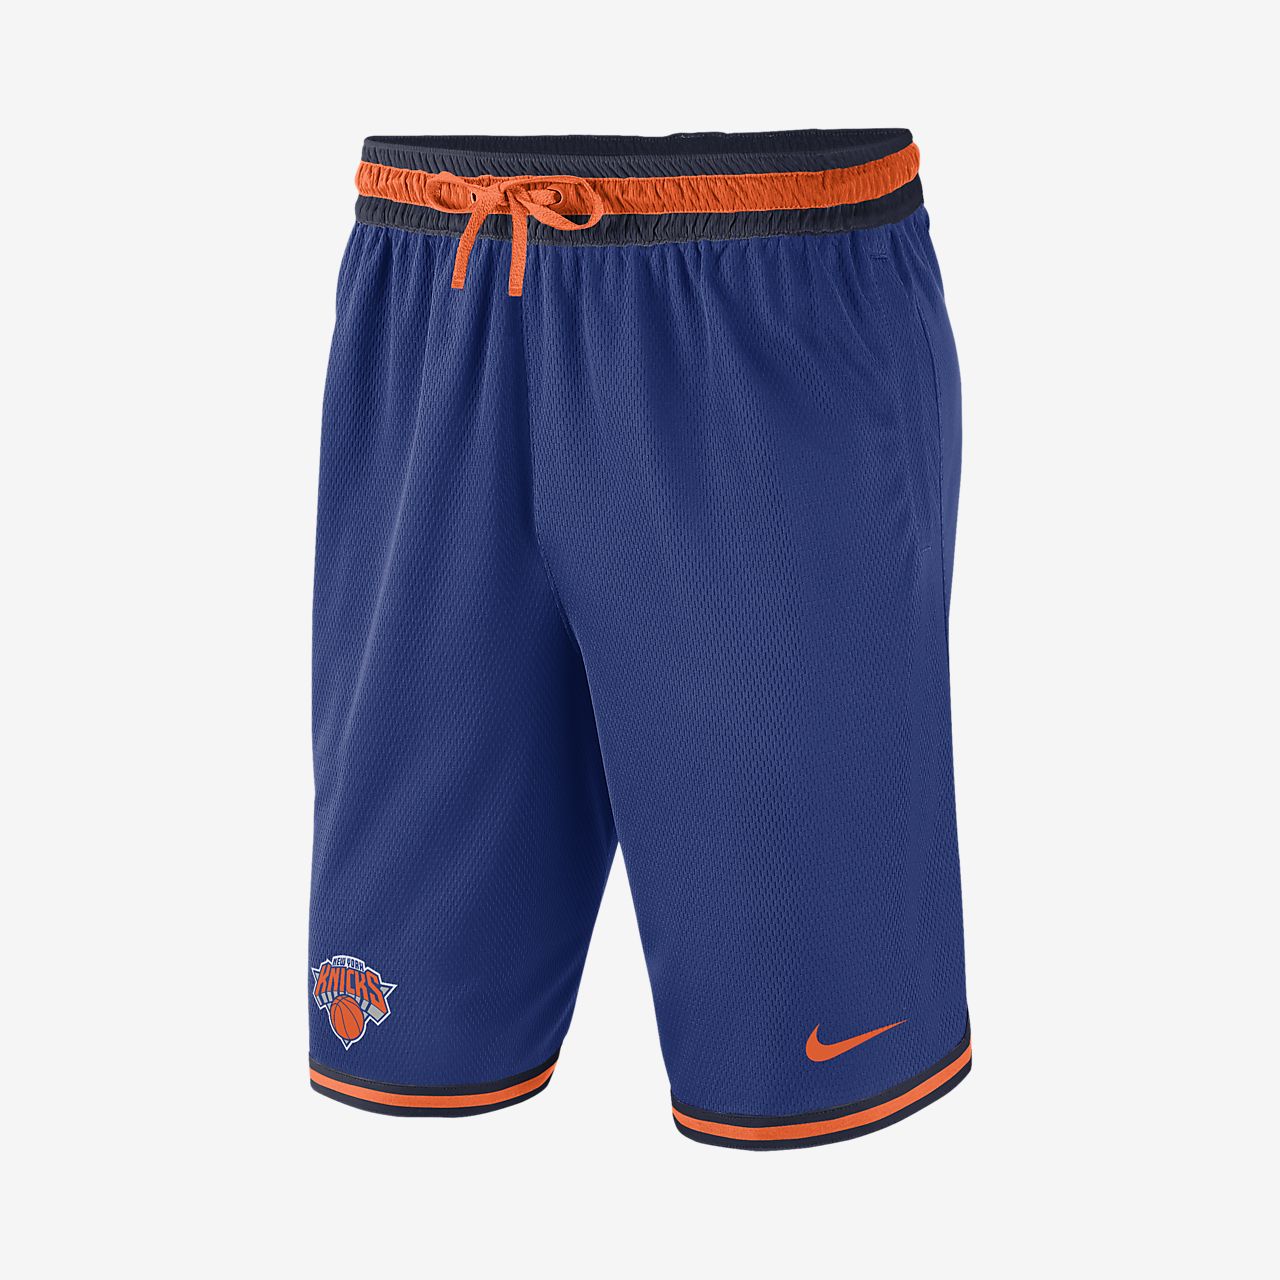 New York Knicks Nike Men's NBA Shorts 